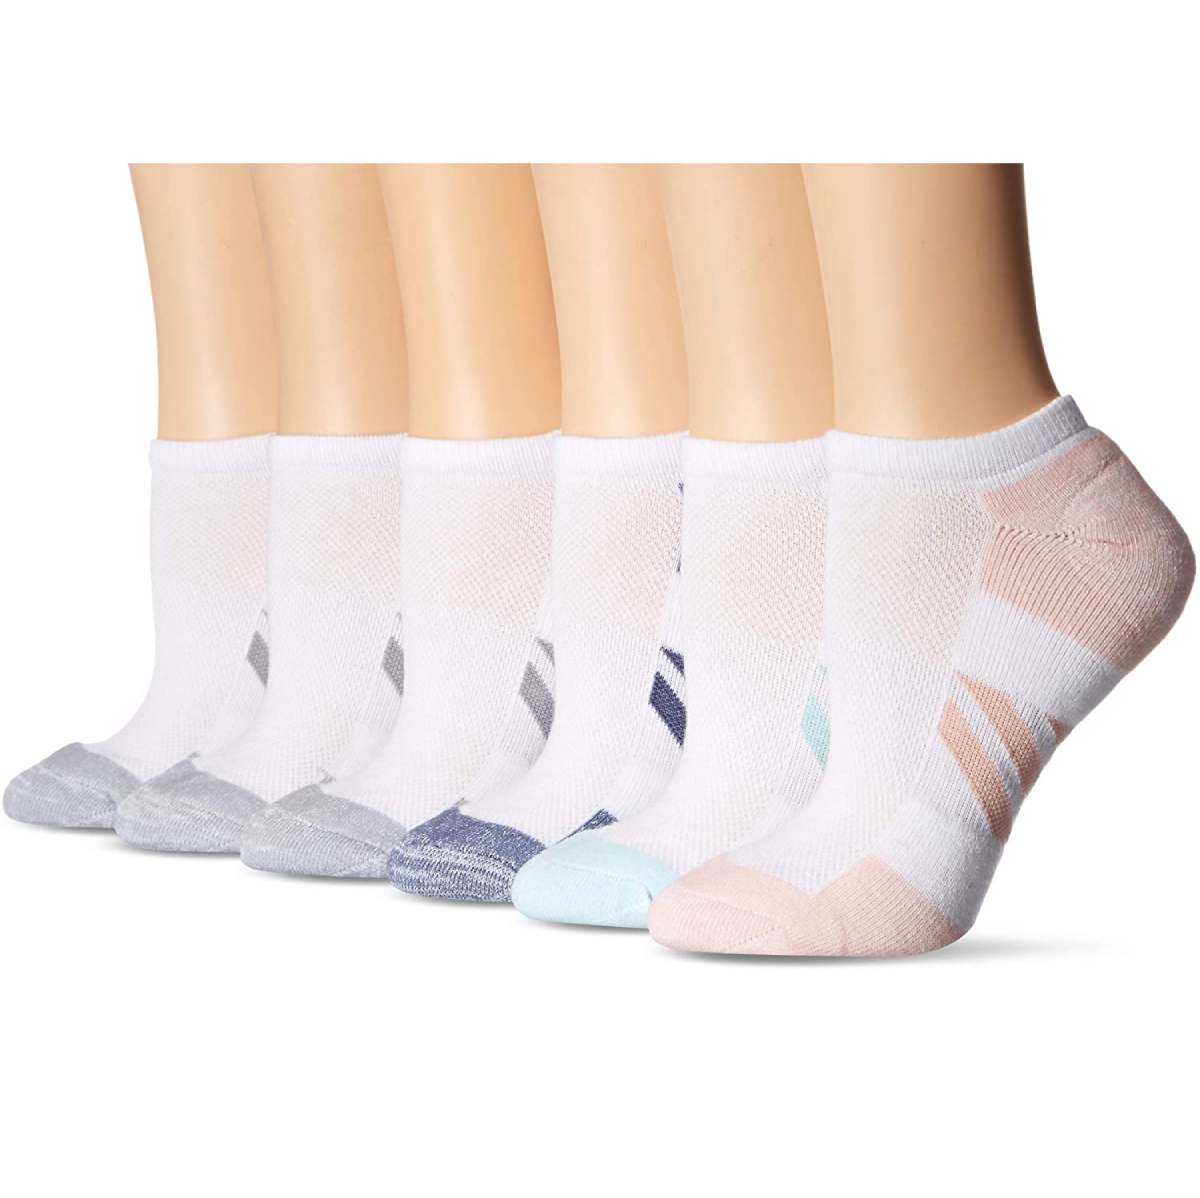 The 11 Best Padded Socks for Knee and Foot Pain - Worldlifestylenews.com